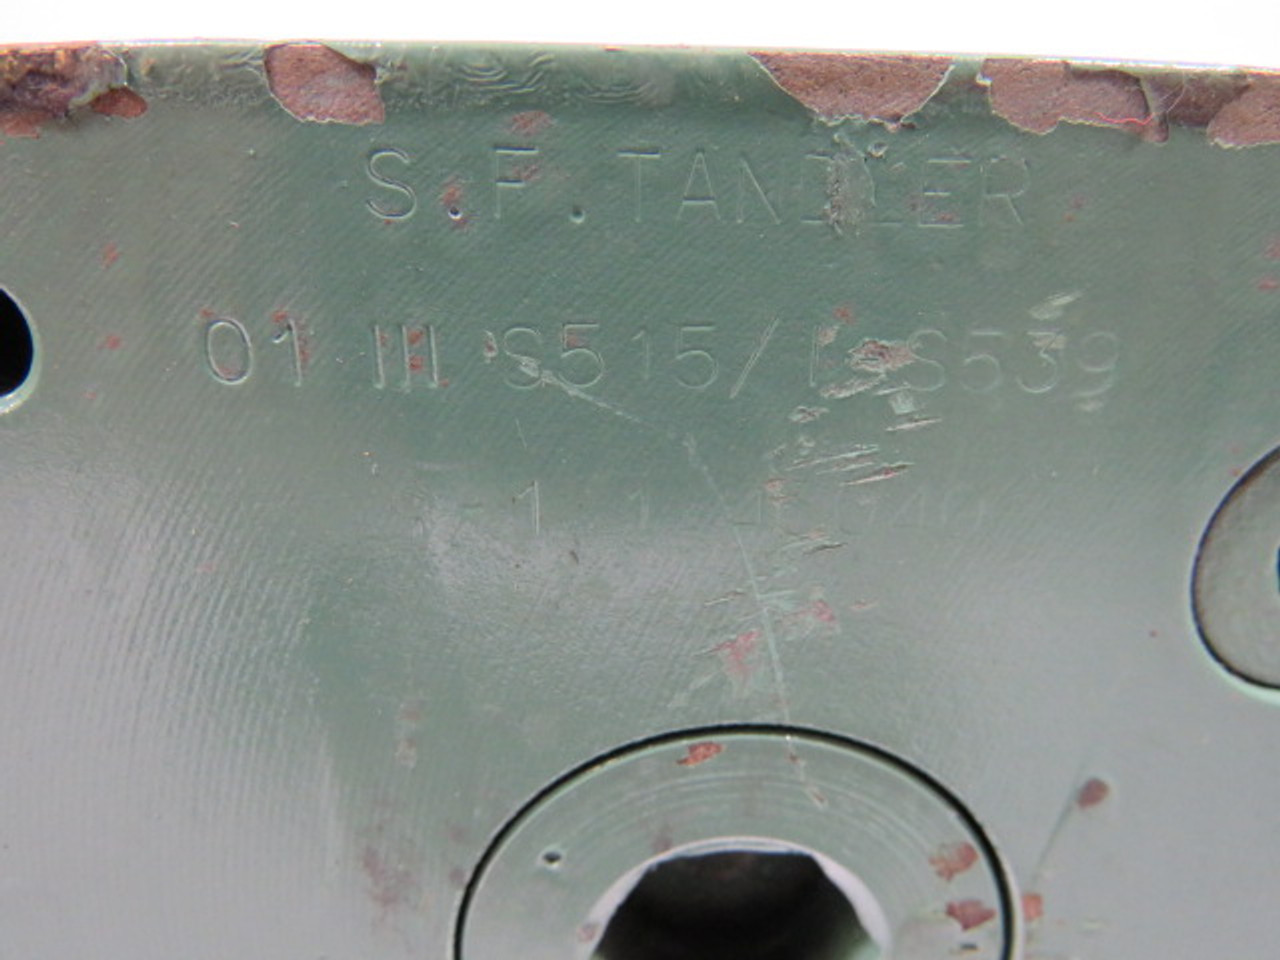 Tandler STD-01-III-S515/1-S539 Spiral Bevel Gear Box 1:1 Ratio Size III USED